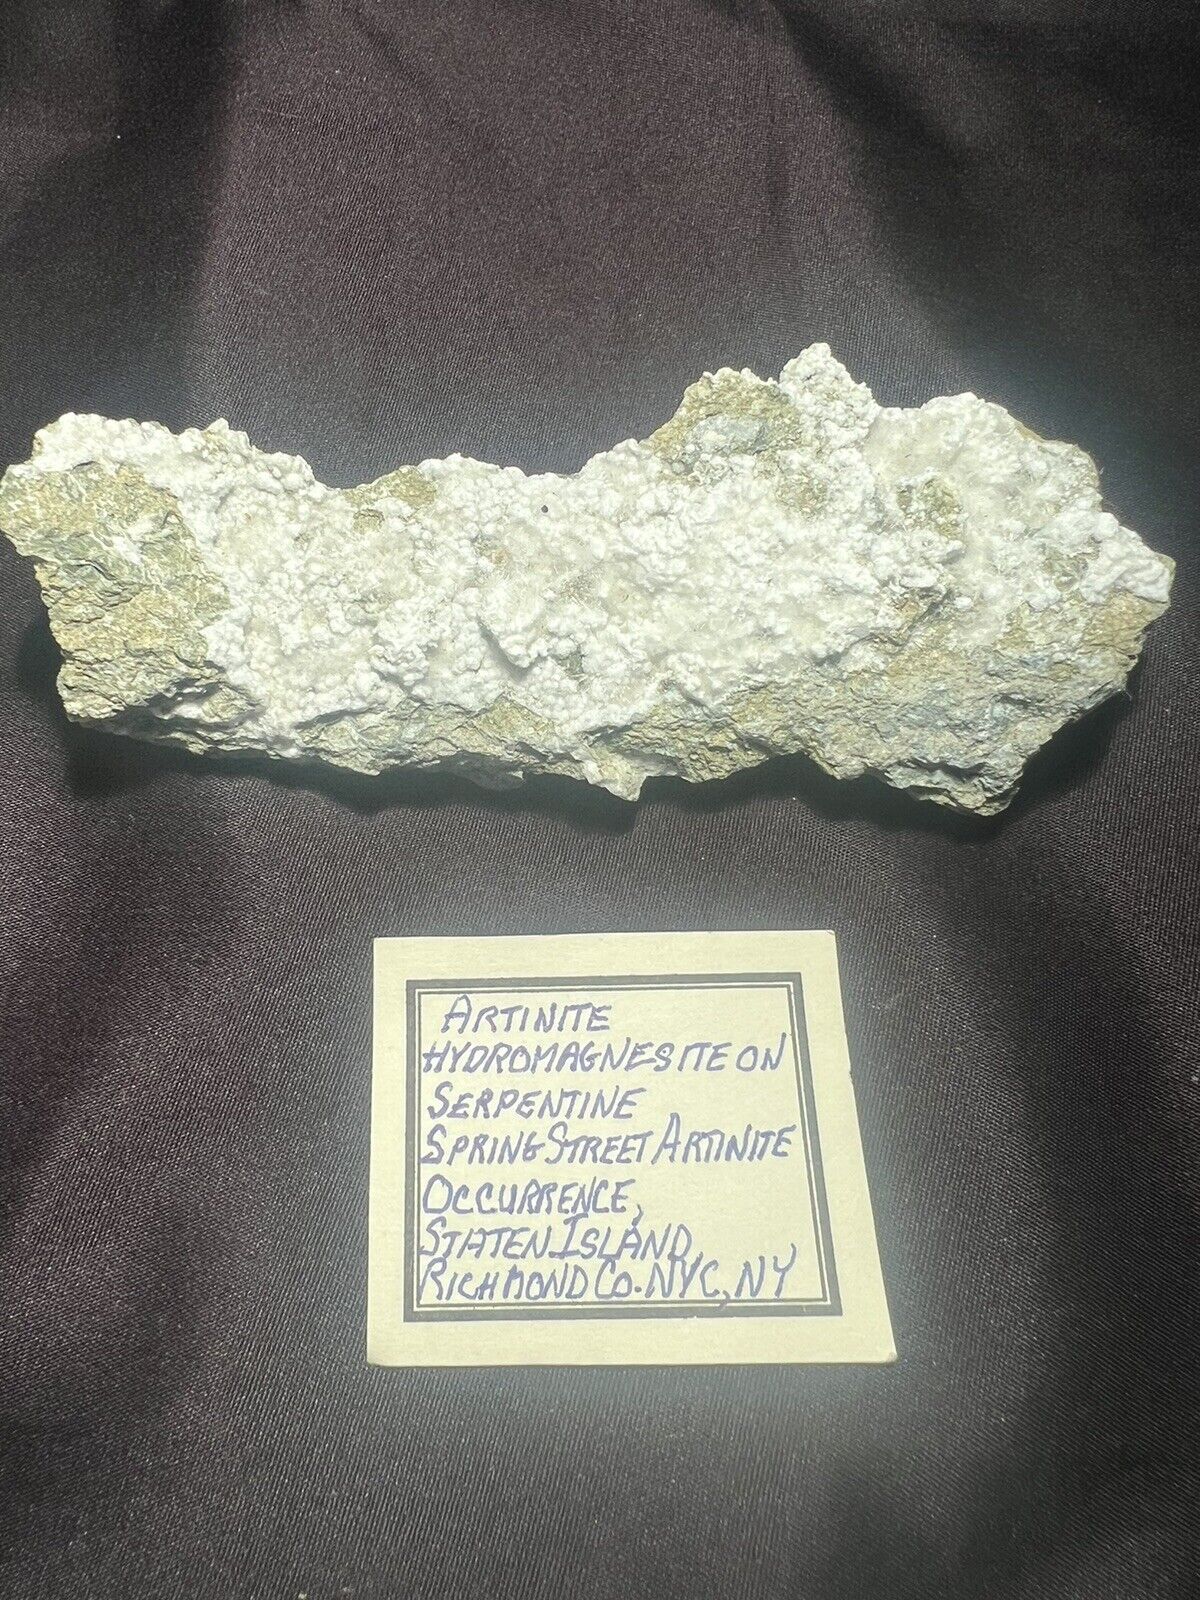 Artinite, Hydromagnesite on Serpentine, Staten Island, NY, NY Rare